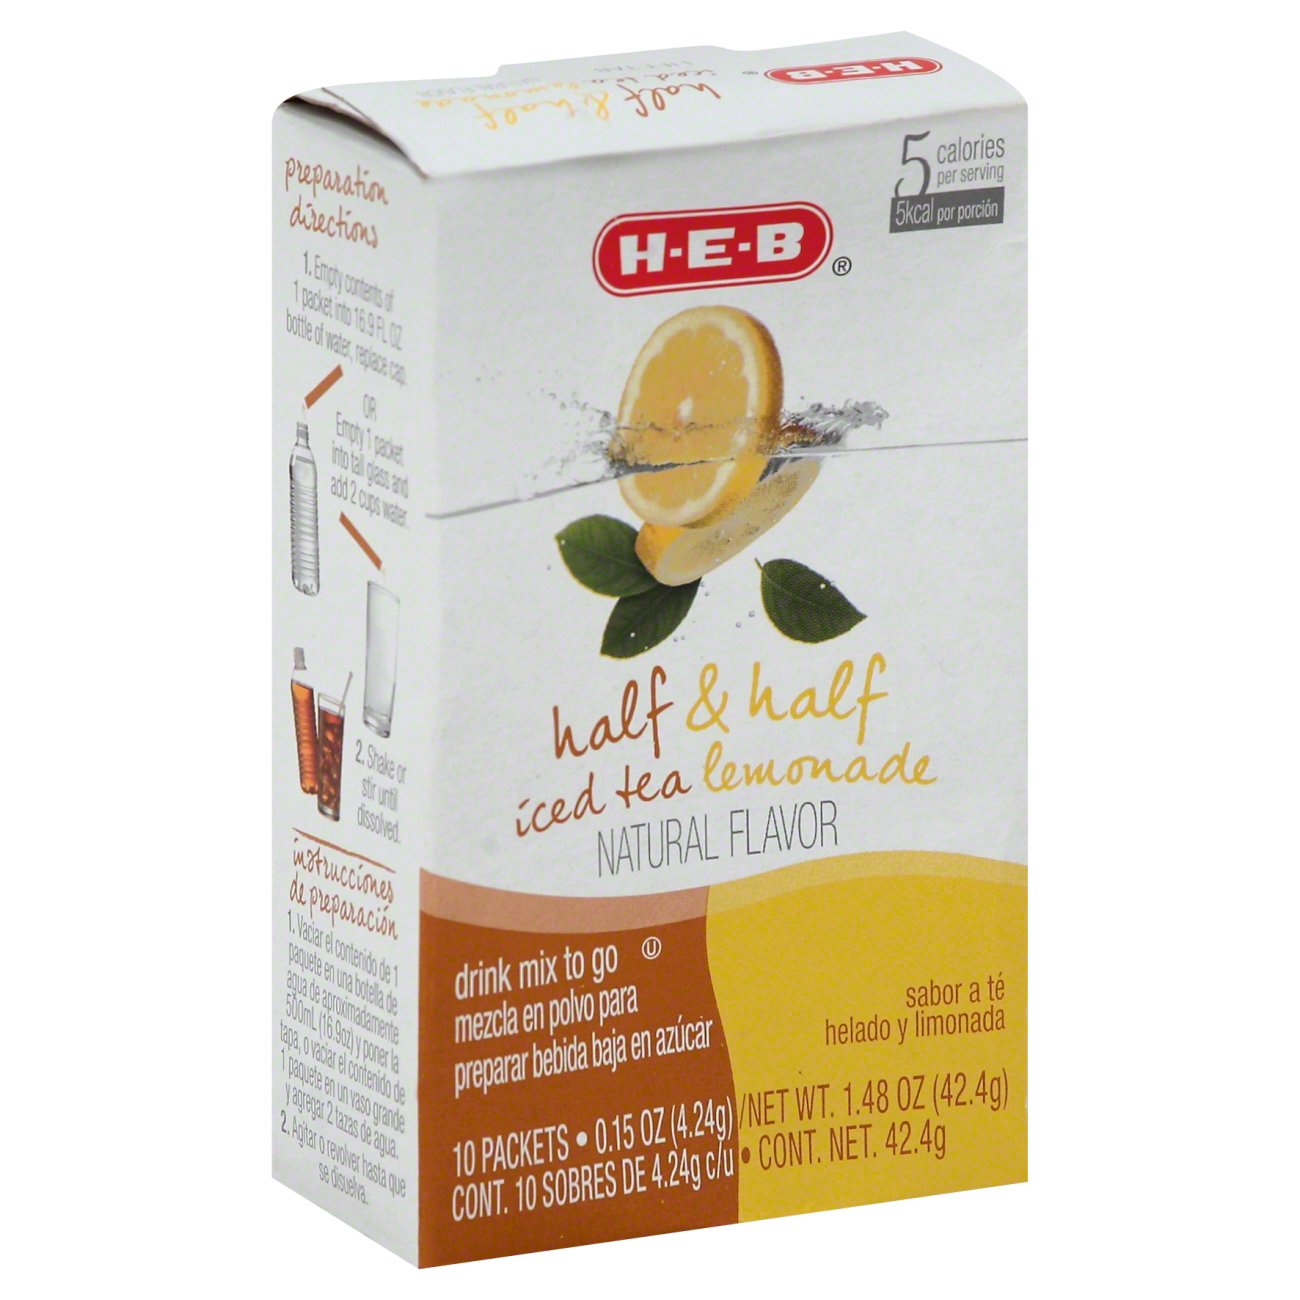 Lipton Iced Tea K-Cups Lemonade - Shop Tea at H-E-B